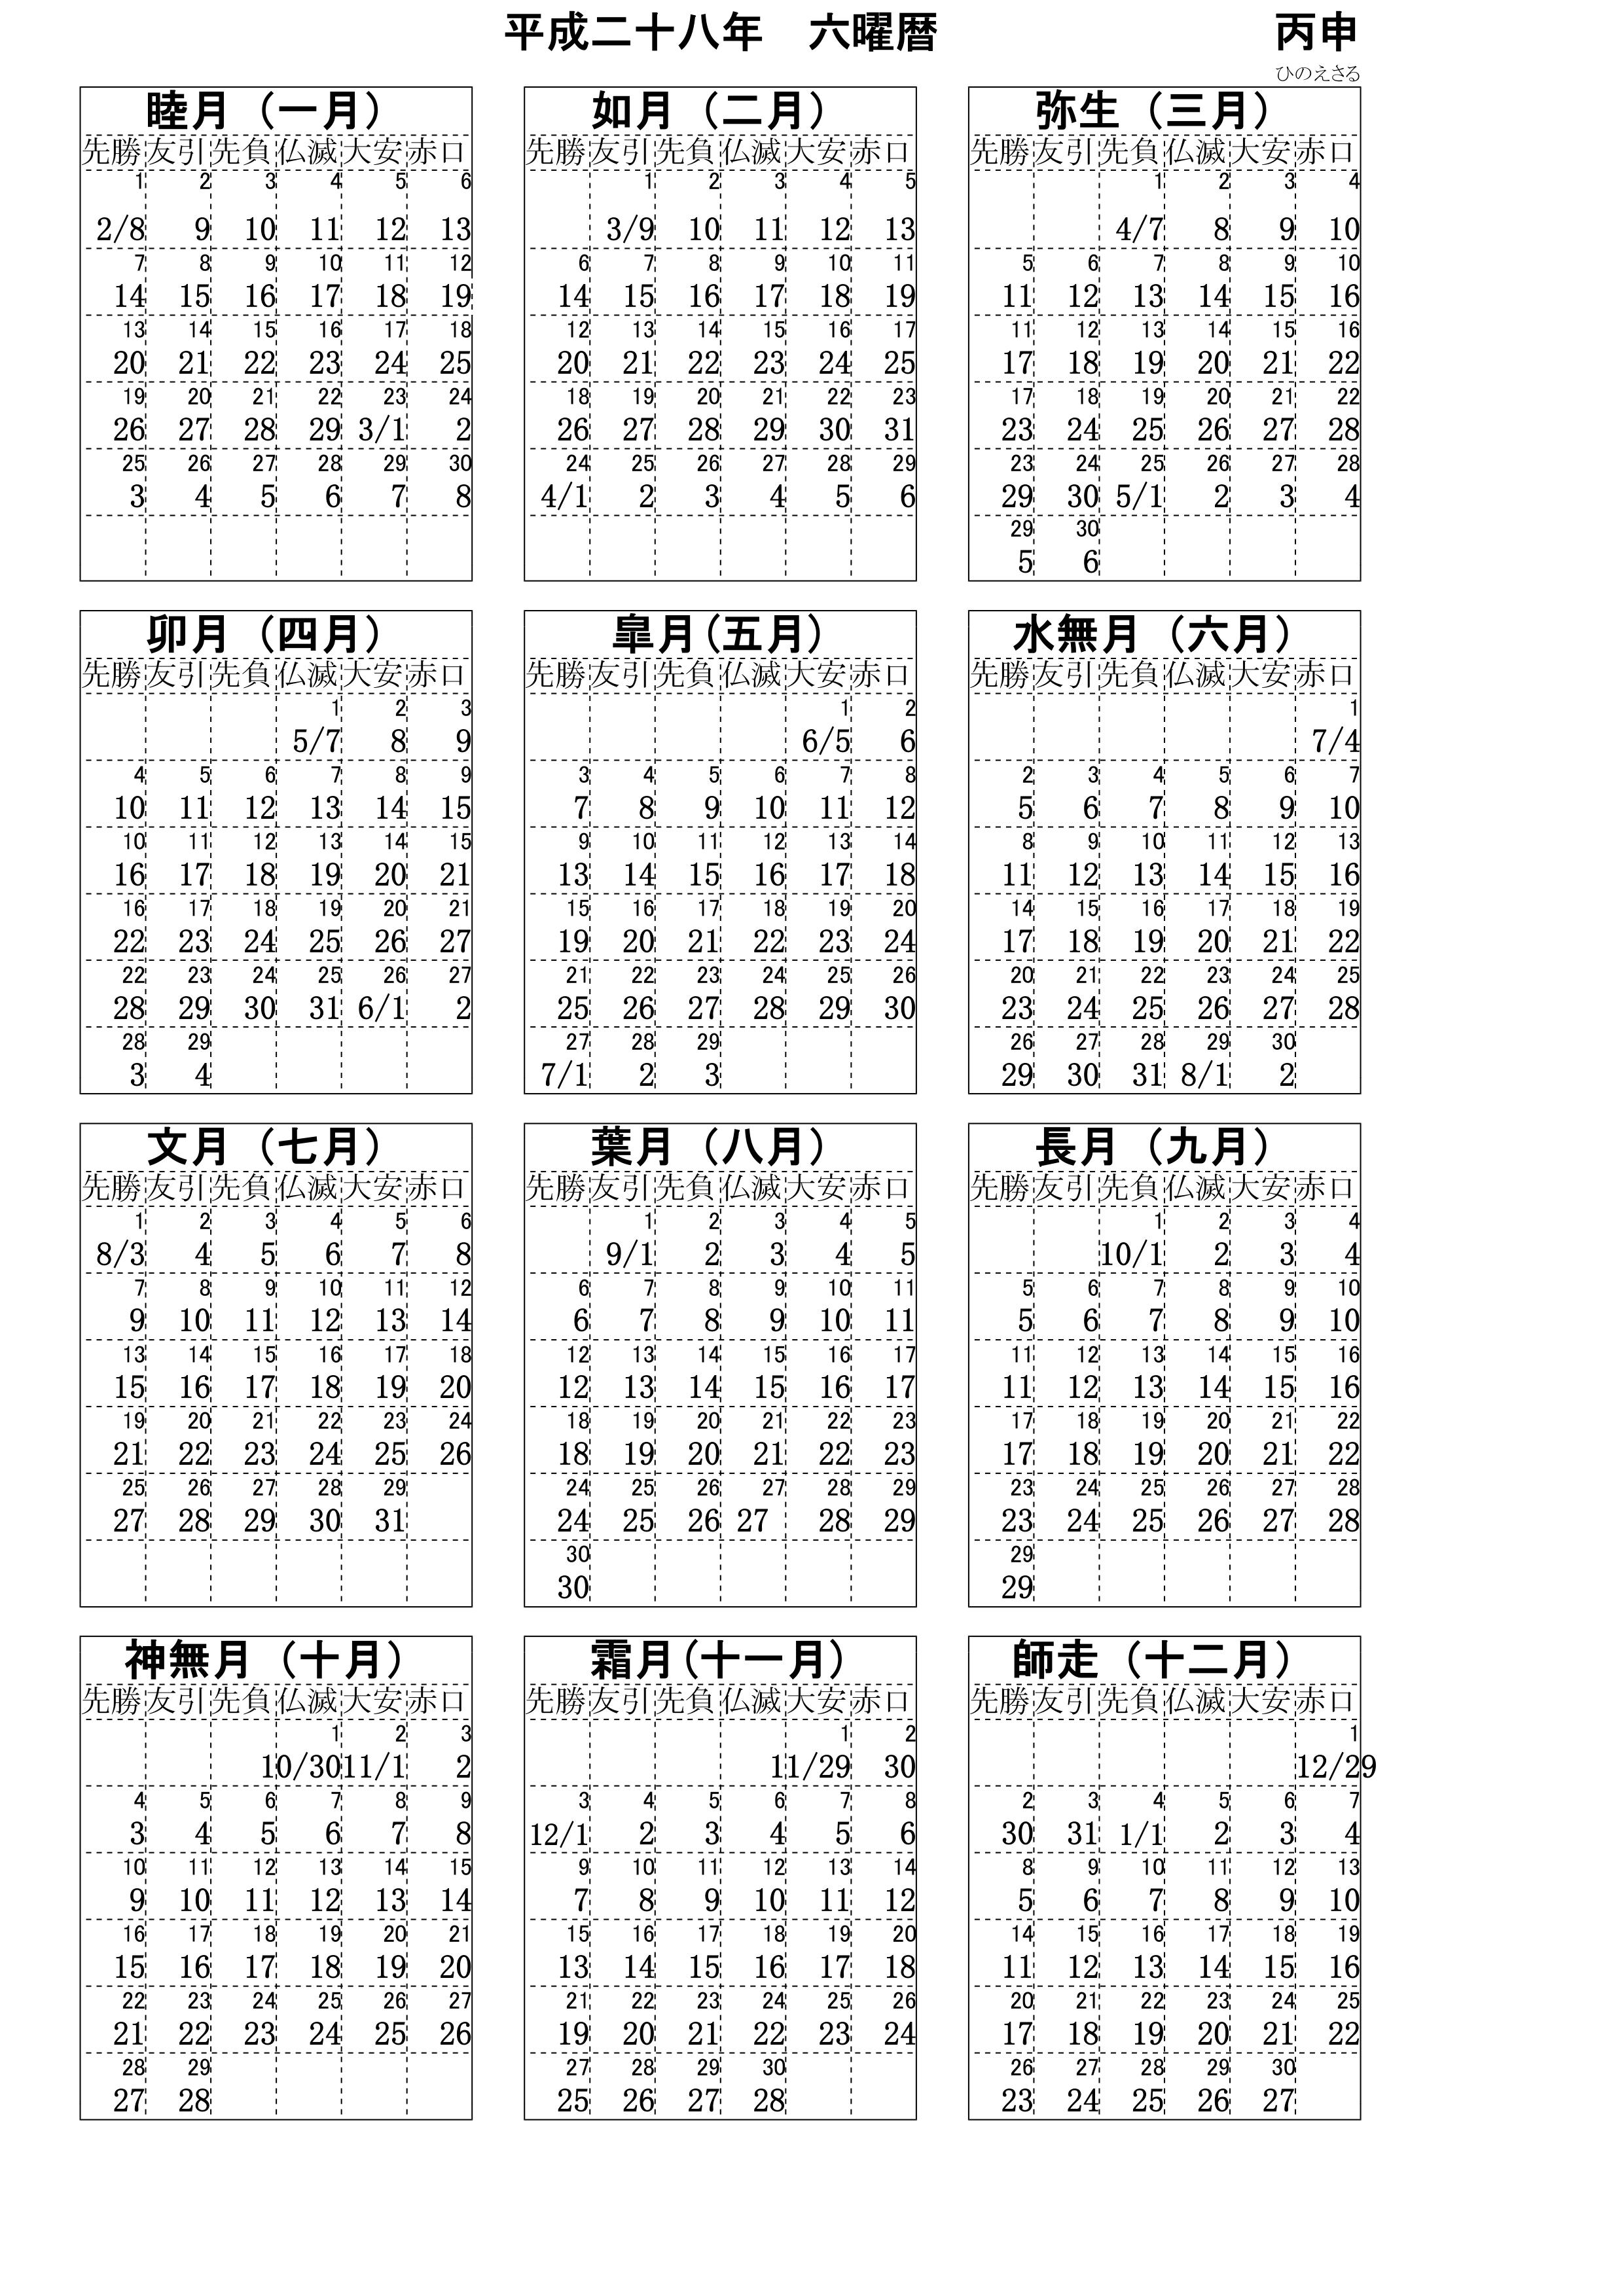 Sokuup 平成28年 六曜暦 カレンダー Permalink